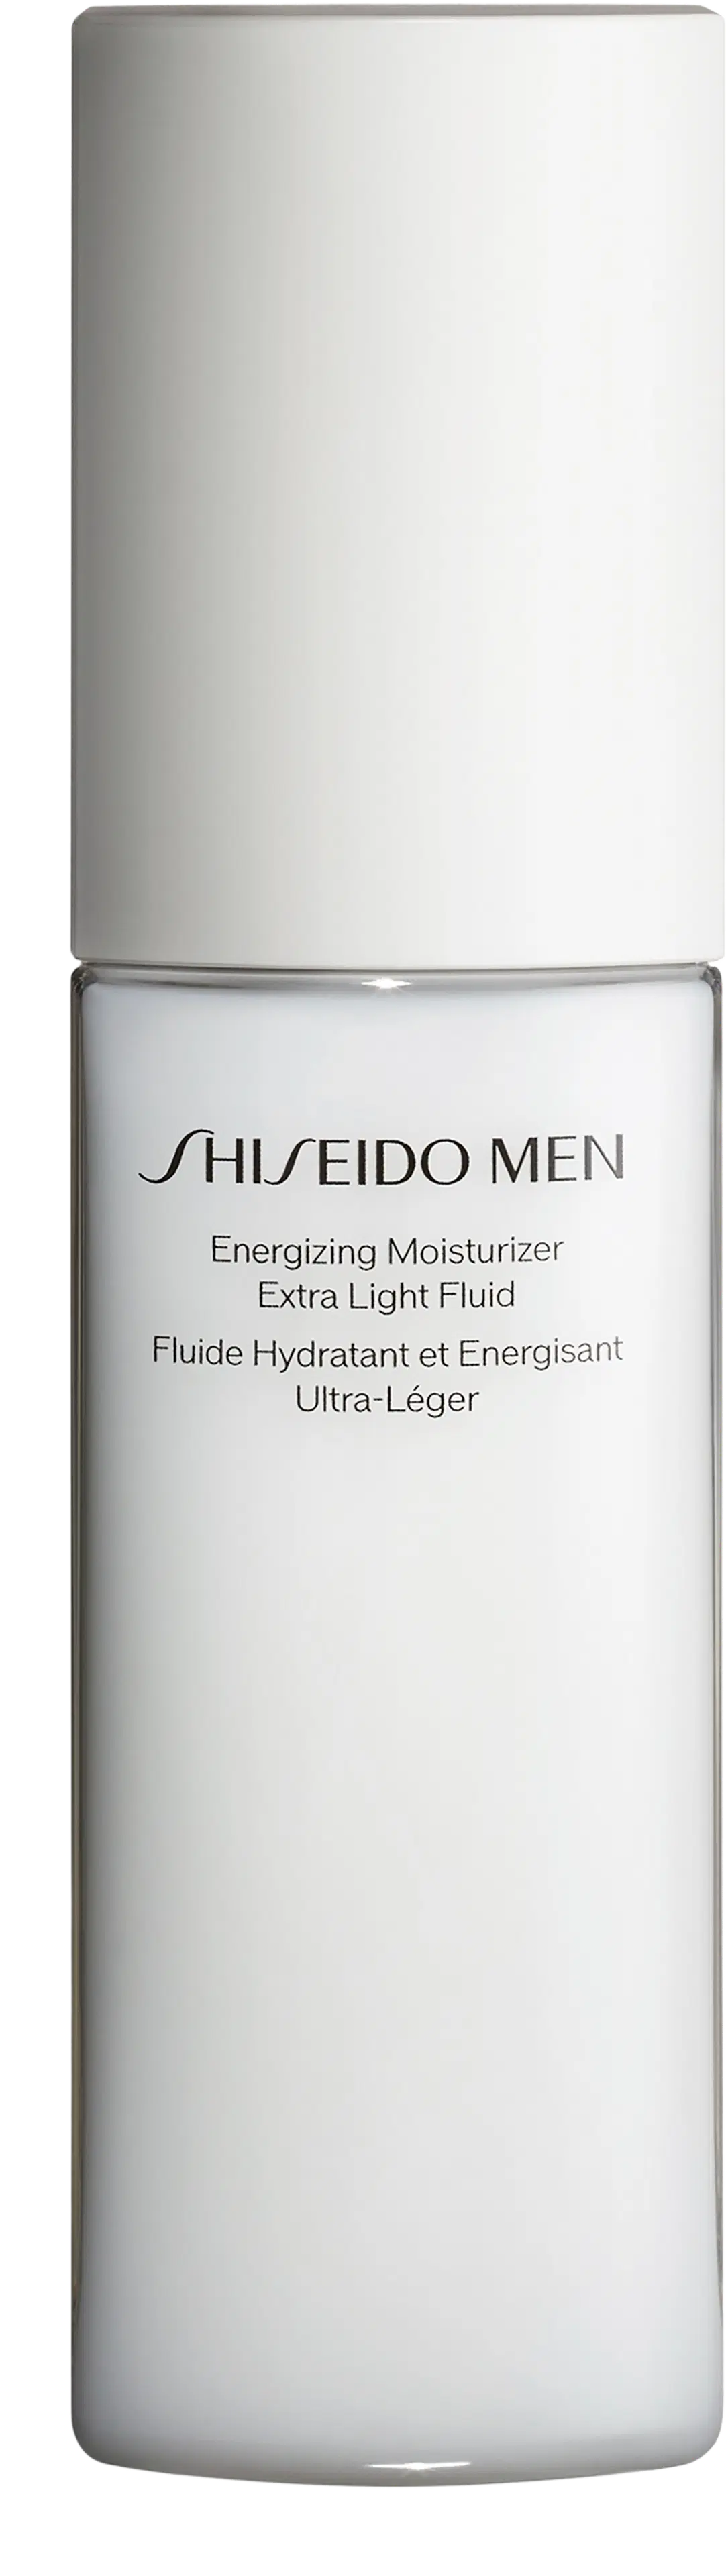 Shiseido Men Energizing Moisturizer Extra Light Fluid kosteusemulsio 100 ml